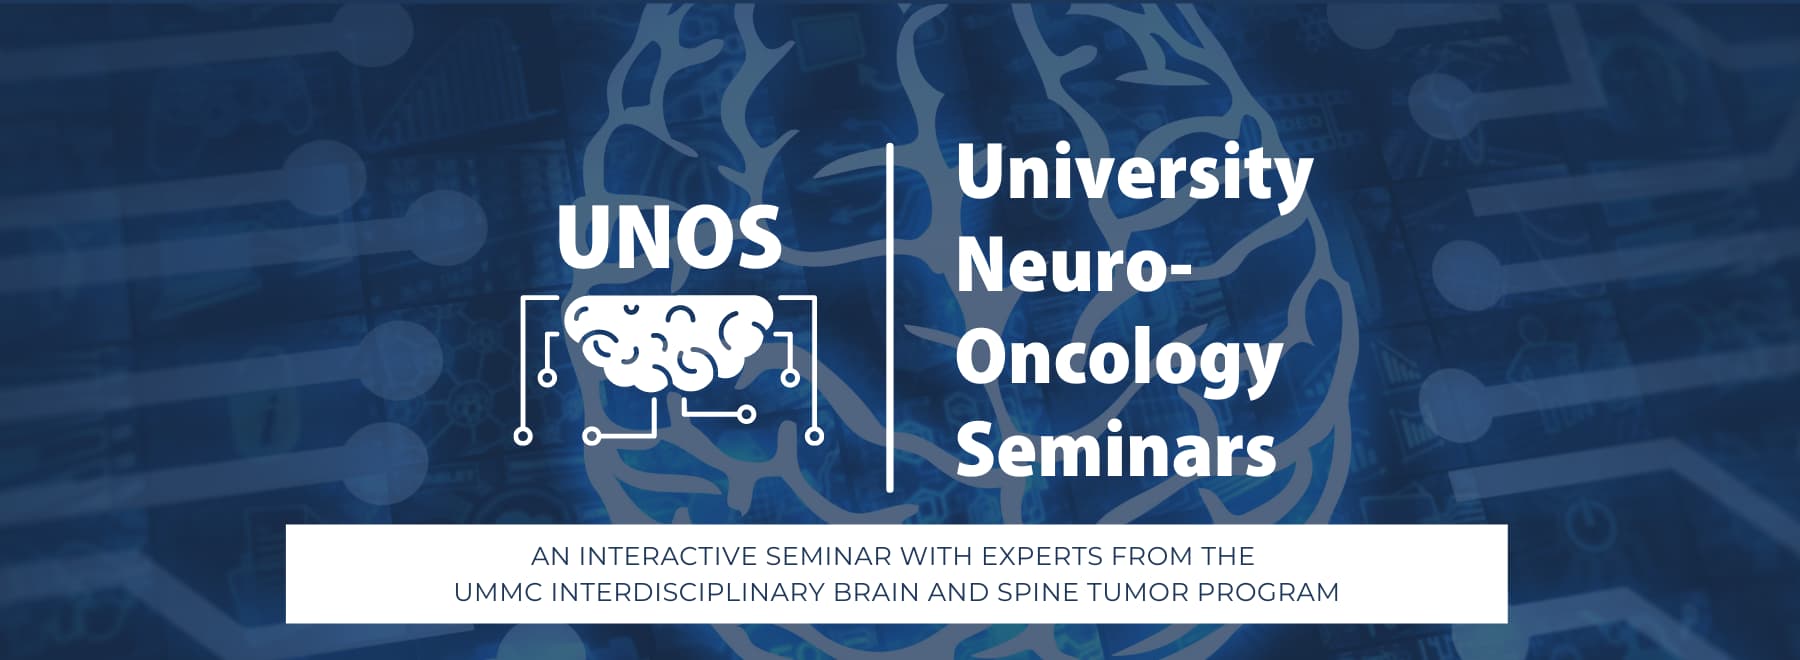 University Neuro-Oncology Seminars